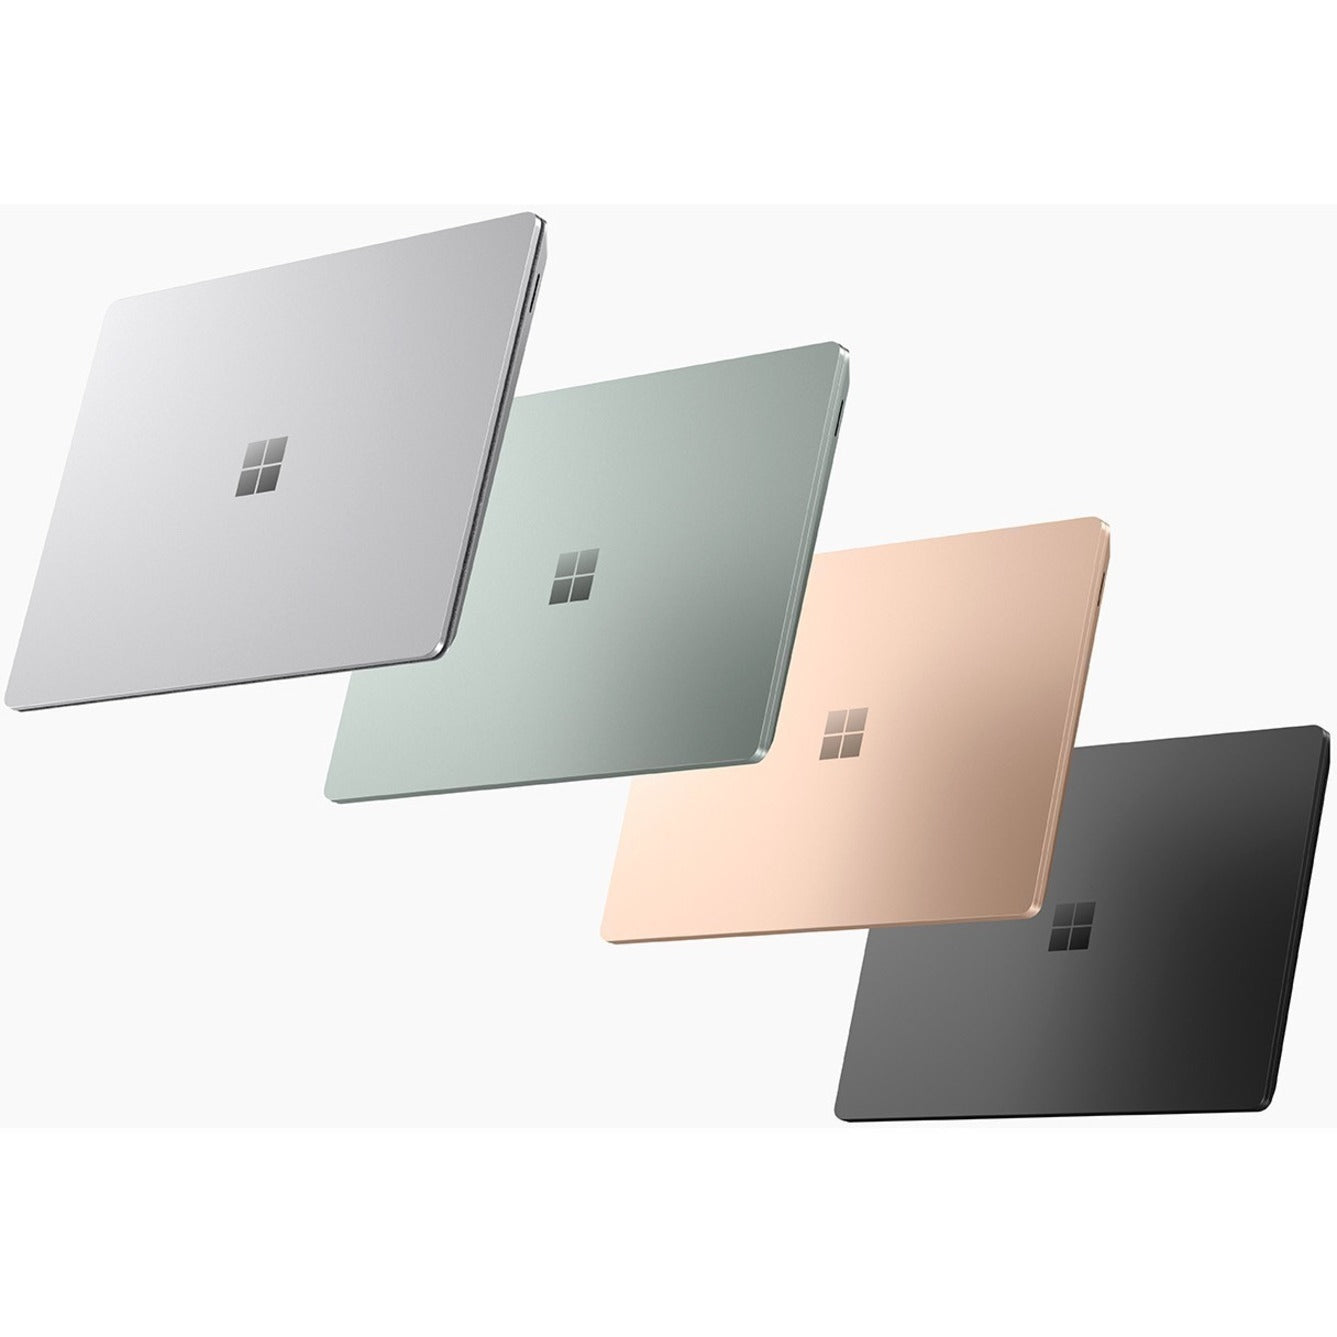 Microsoft RIR-00024 Surface Laptop 5 Notebook, 15" Touchscreen, Core i7, 16GB RAM, 512GB SSD, Windows 10 Pro